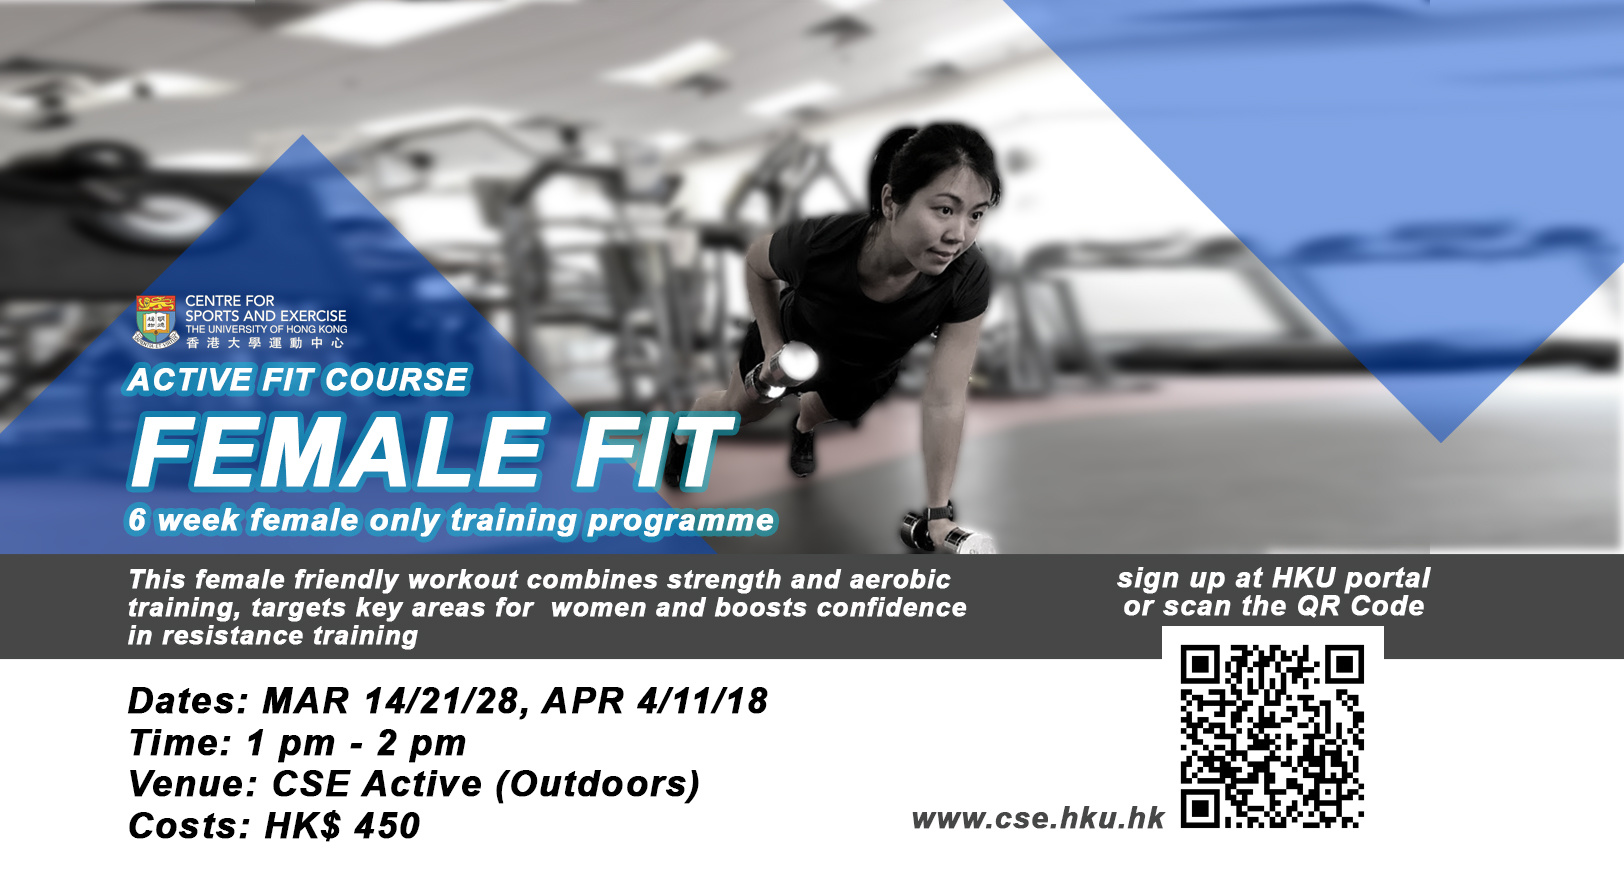 Active Fit Course - Female Fit 